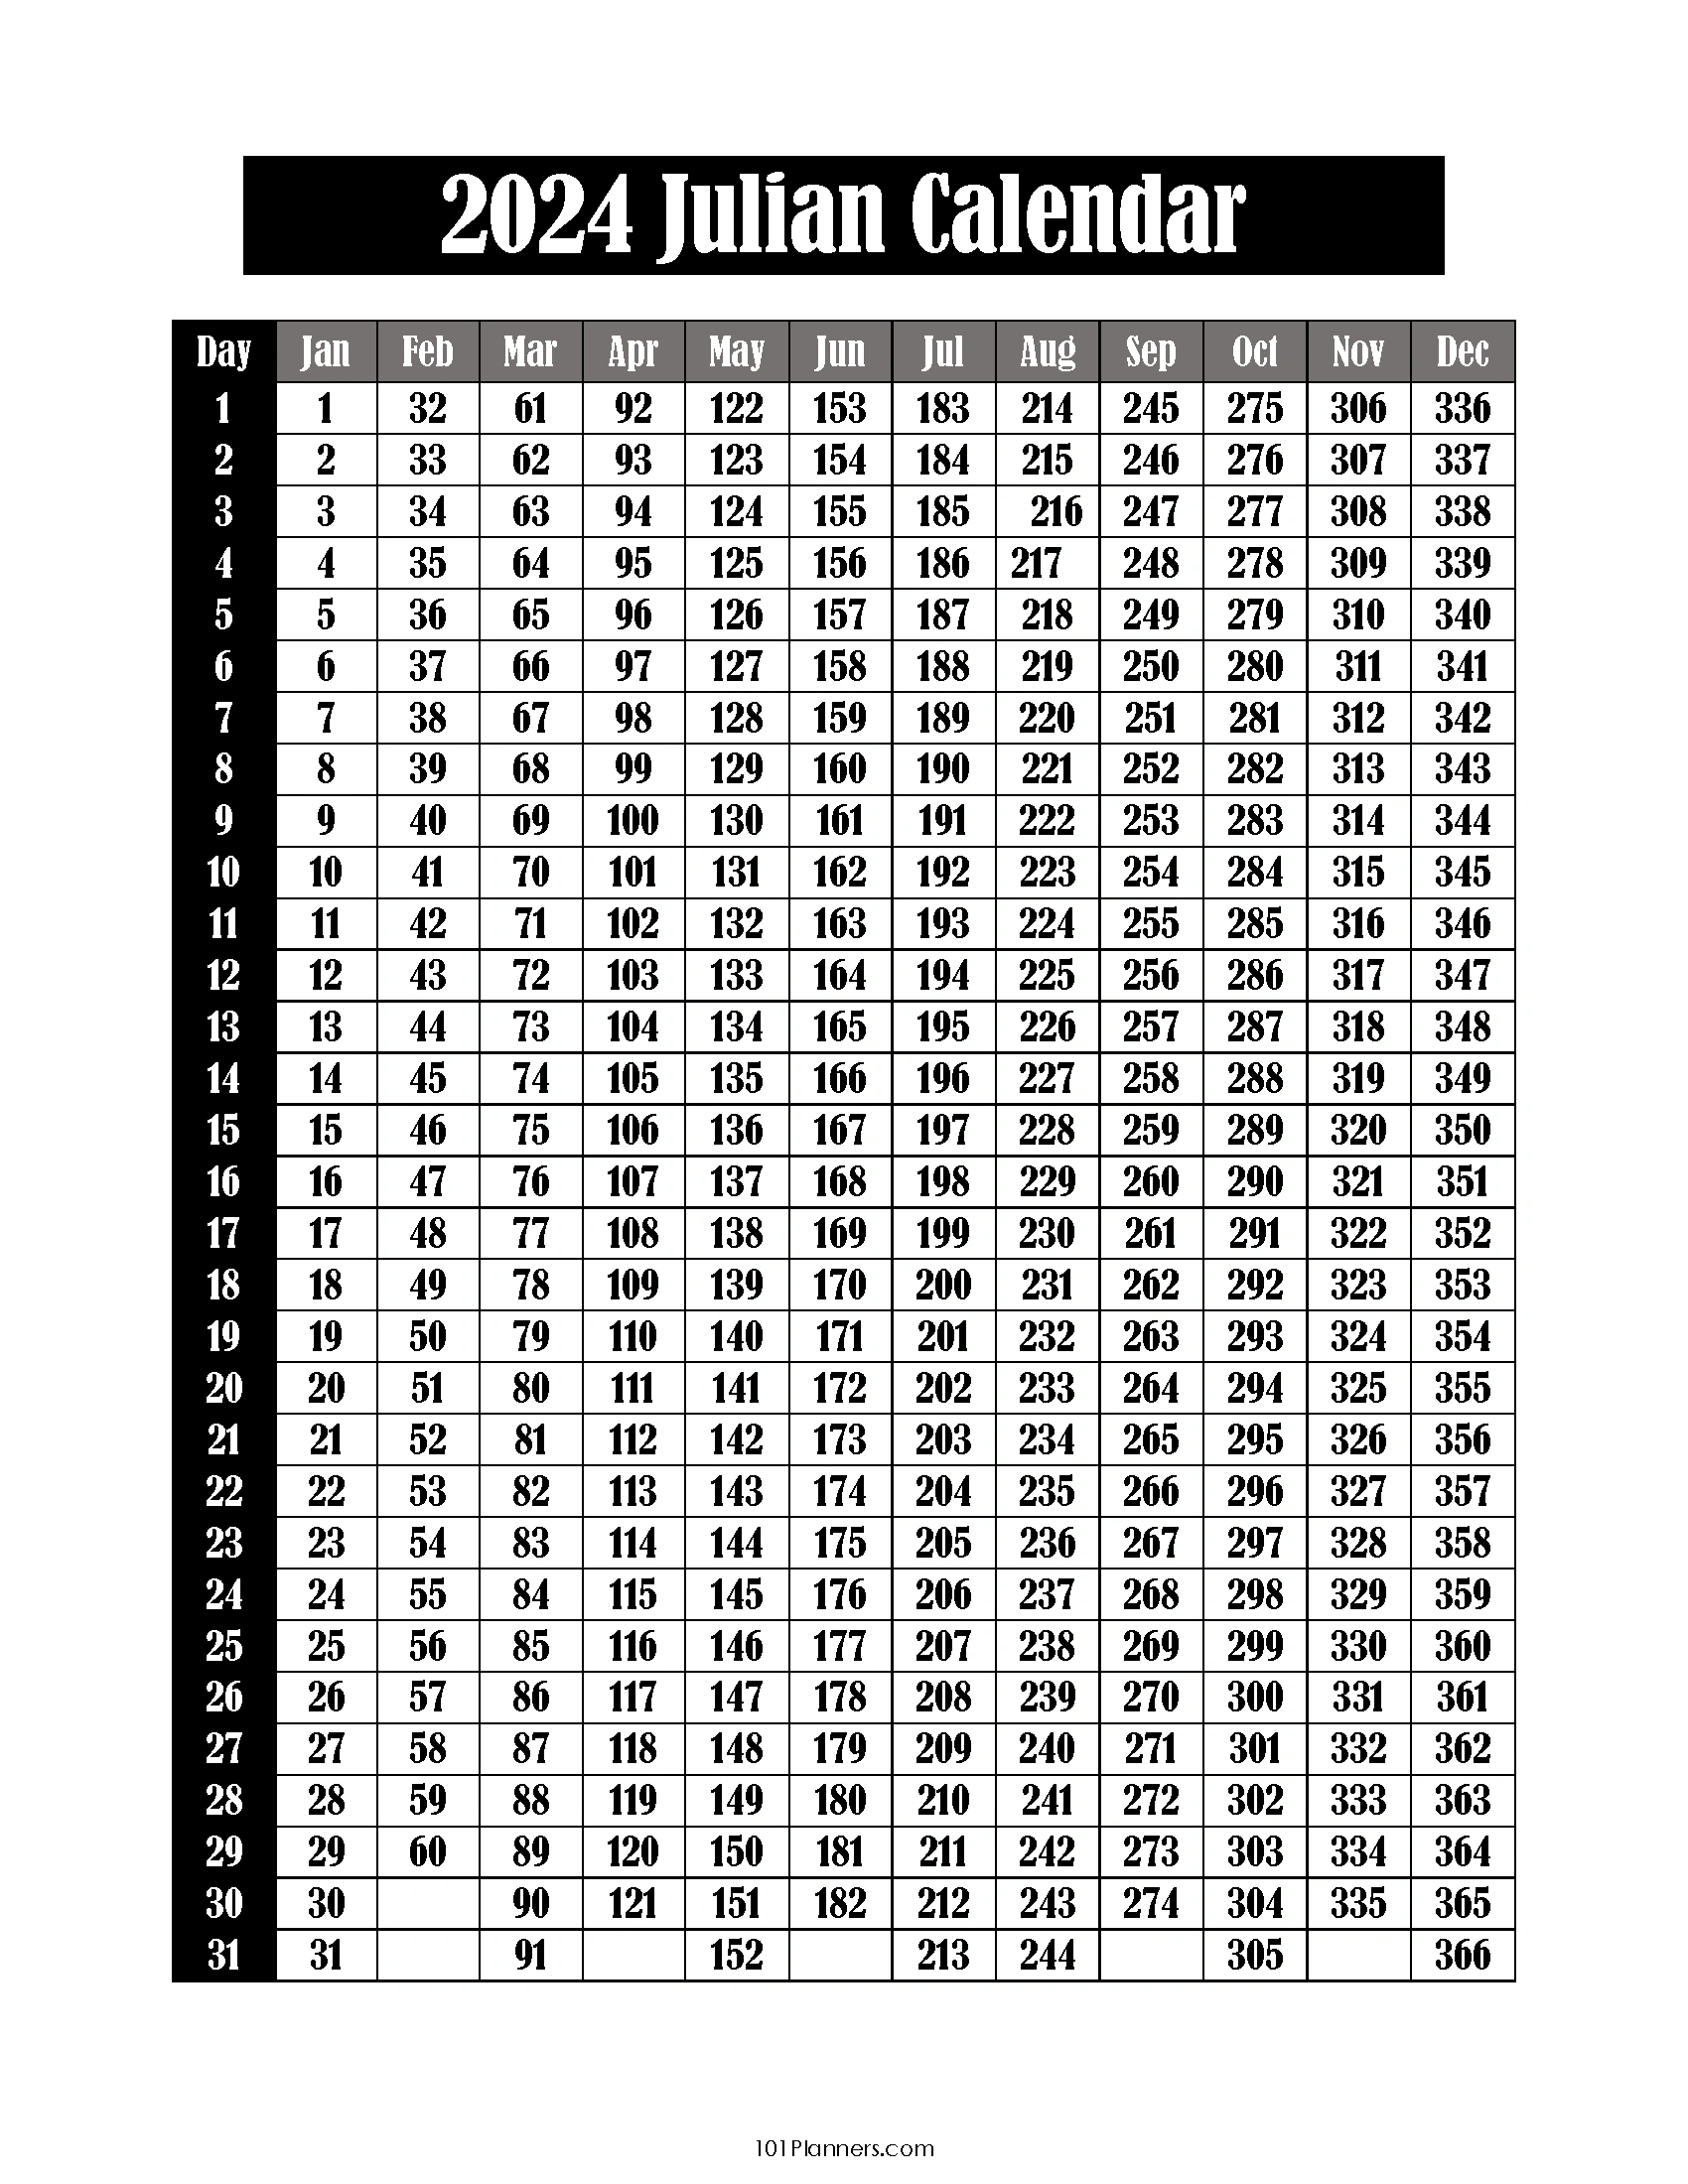 Free Printable Julian Calendar 2024-2032 | Julian Date Today inside Julian Date Calendar 2024 Excel